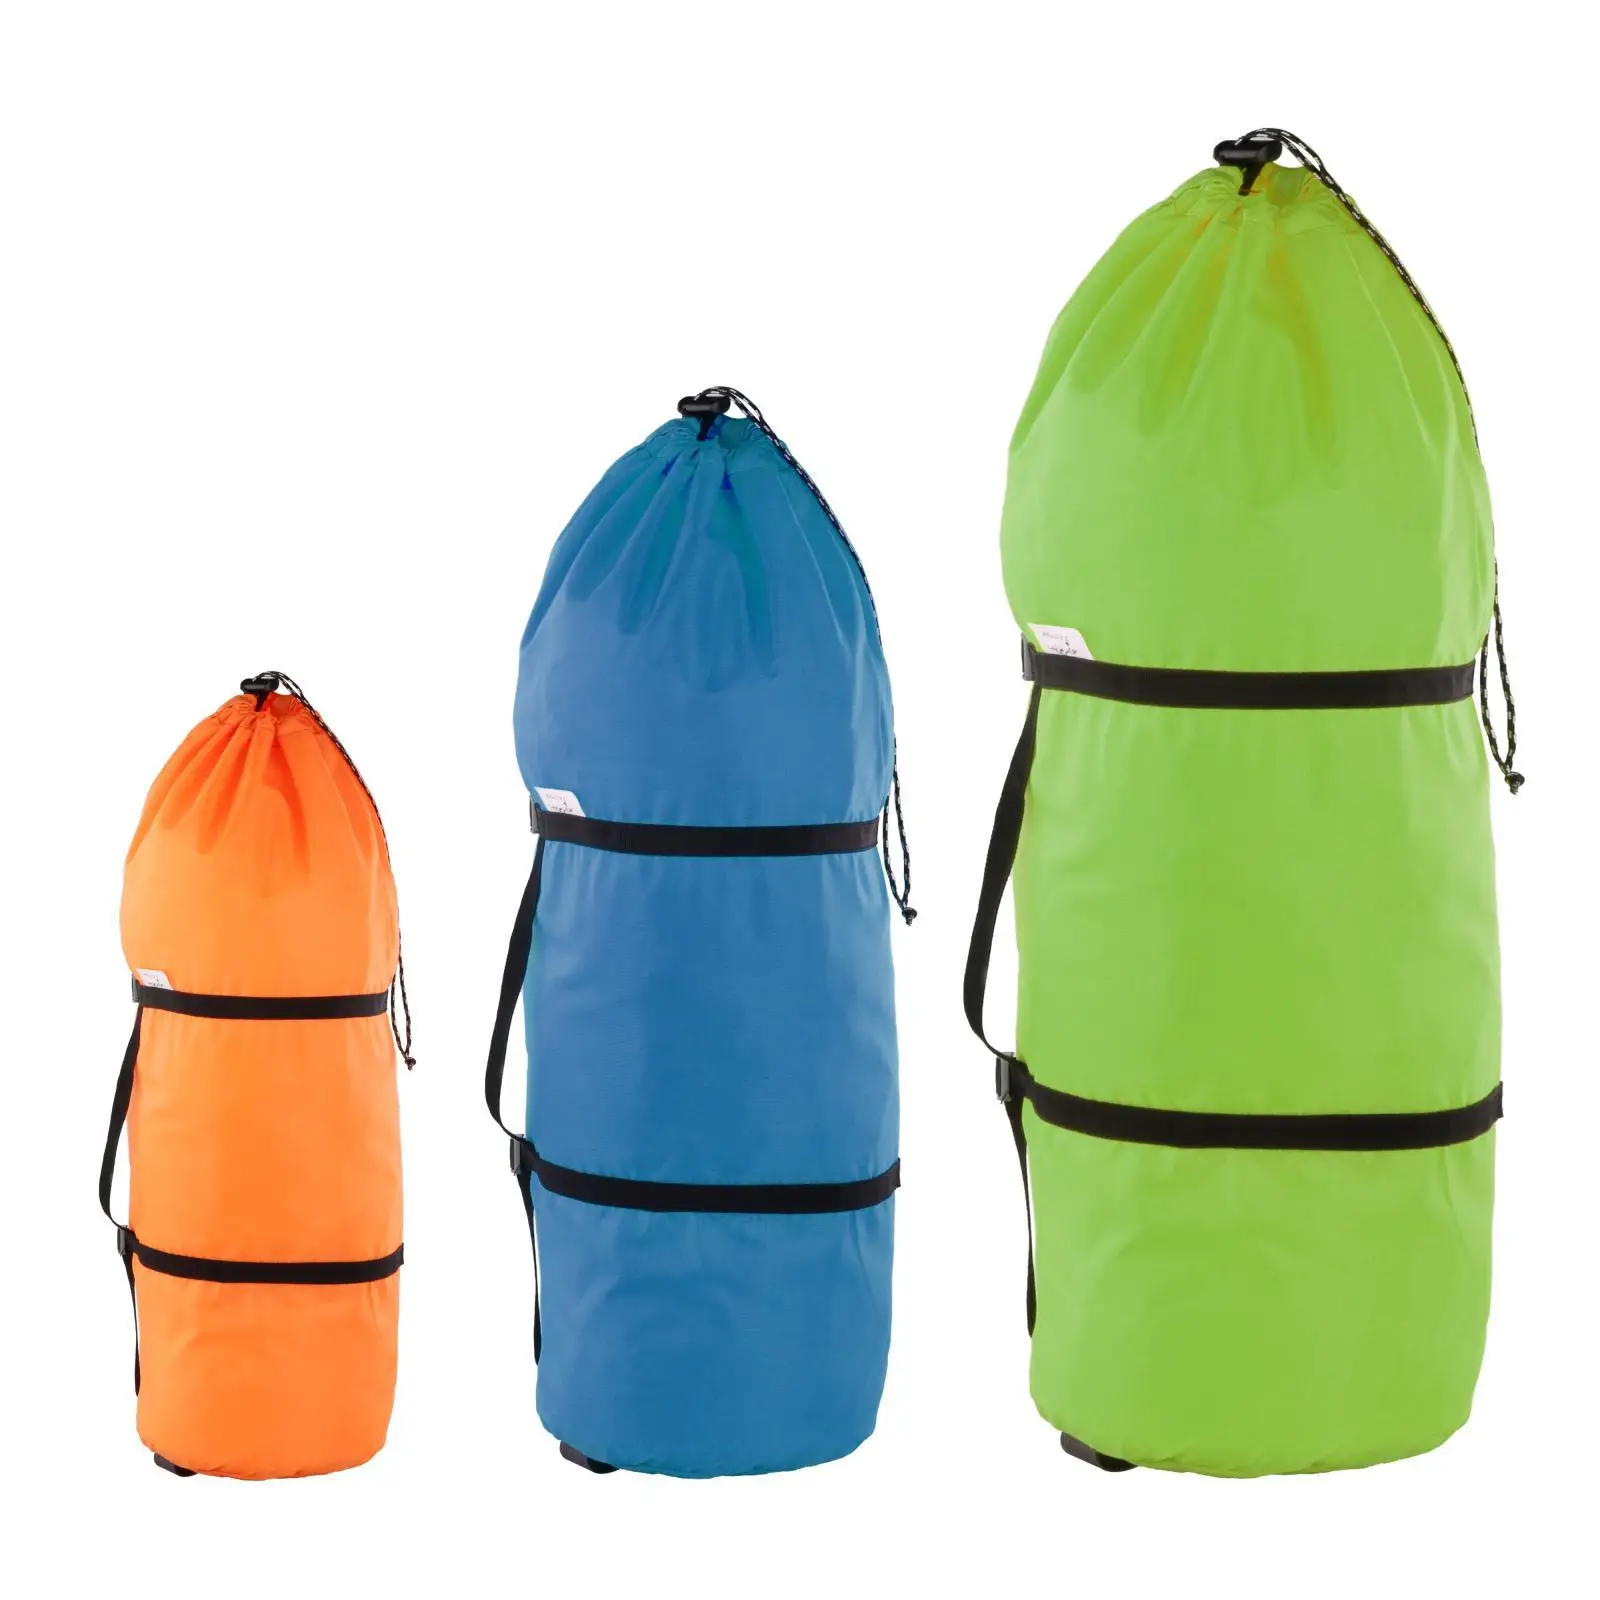 Waterproof Compression Stuff Sack Outdoor Hiking Camping Sleeping Bag Storage 